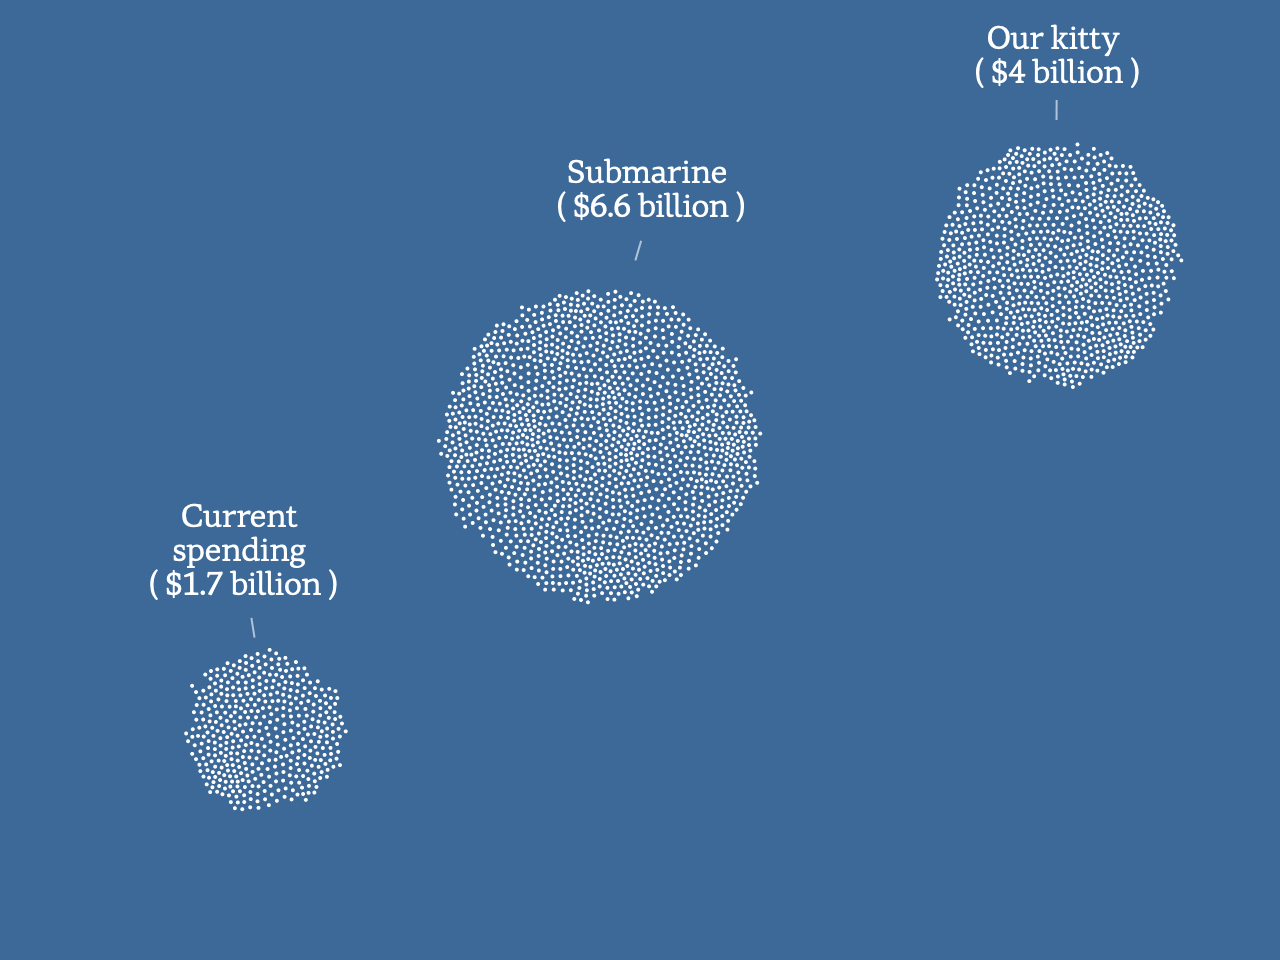 Three masses of dots representing Our kitty: $4 billion; Current spending: $1.7 billion; Submarine: $6.6 billion